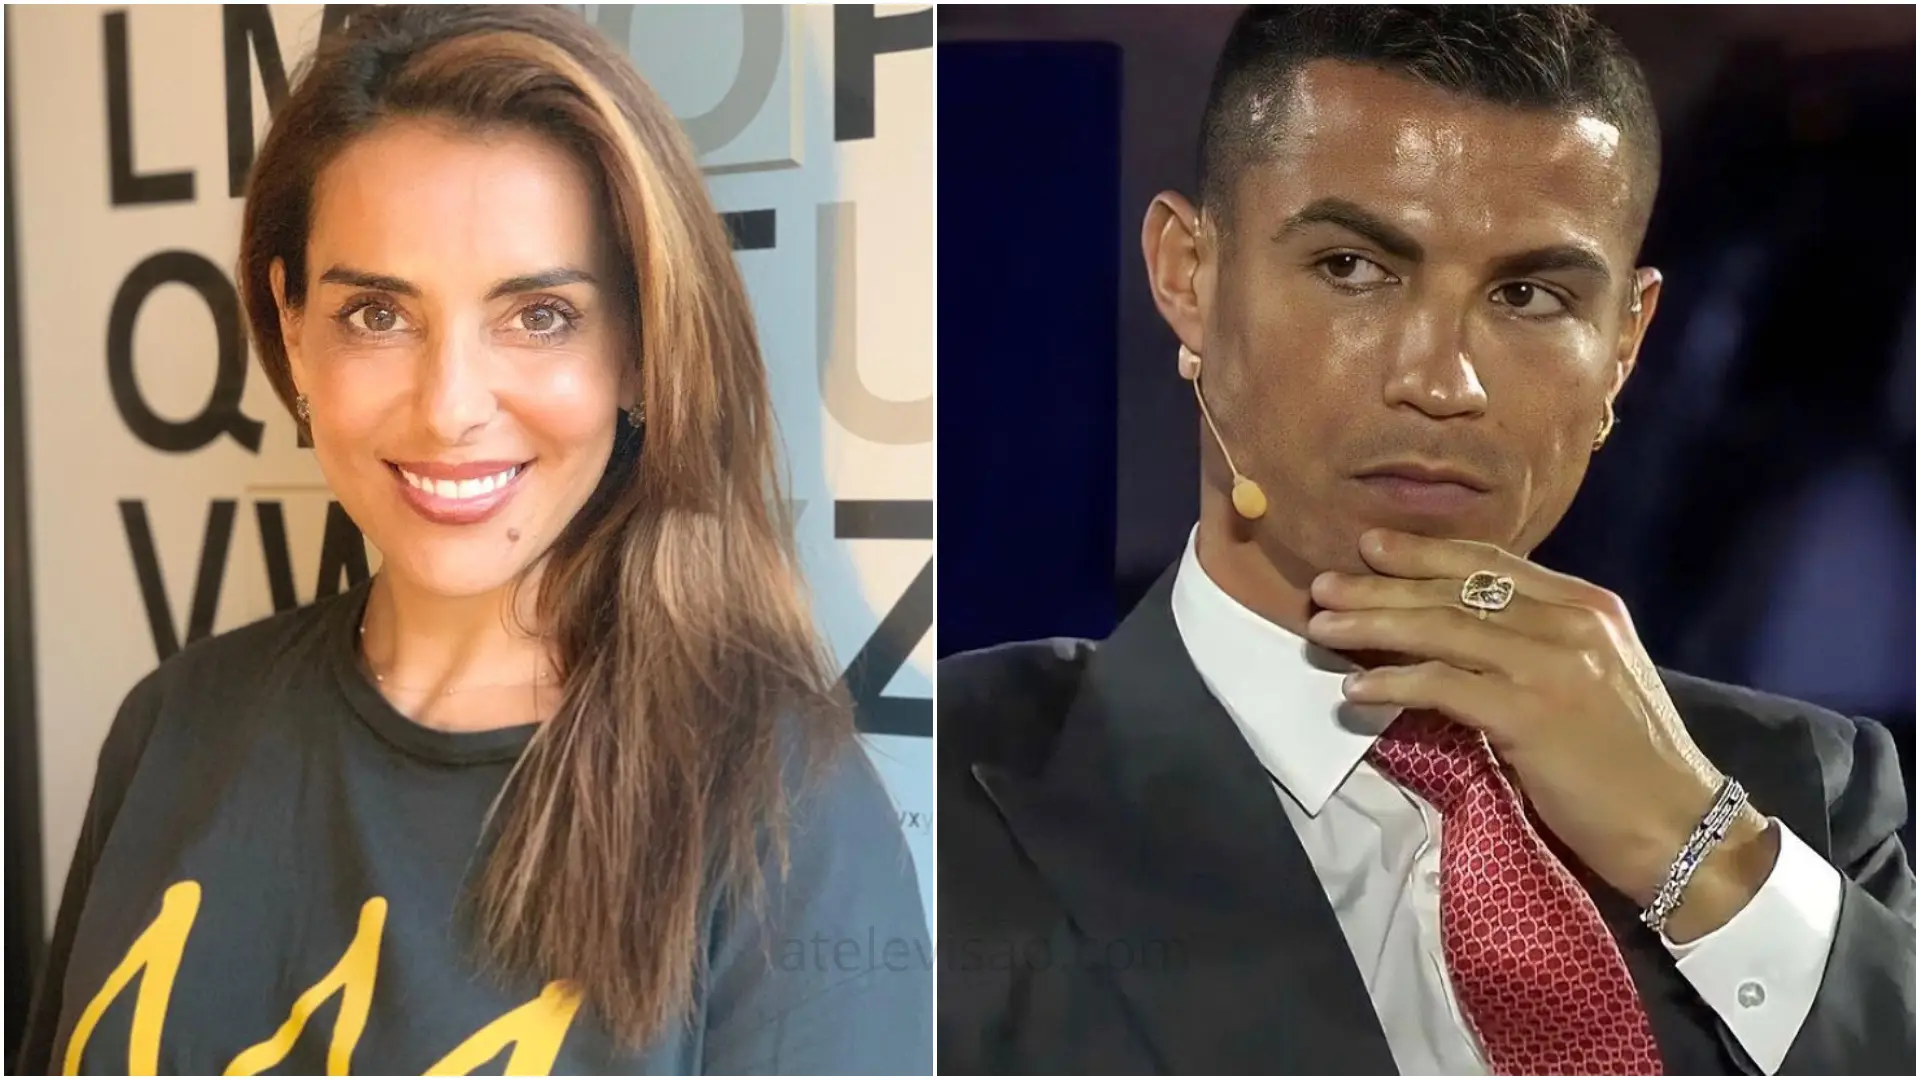 Catarina Furtado Cristiano Ronaldo